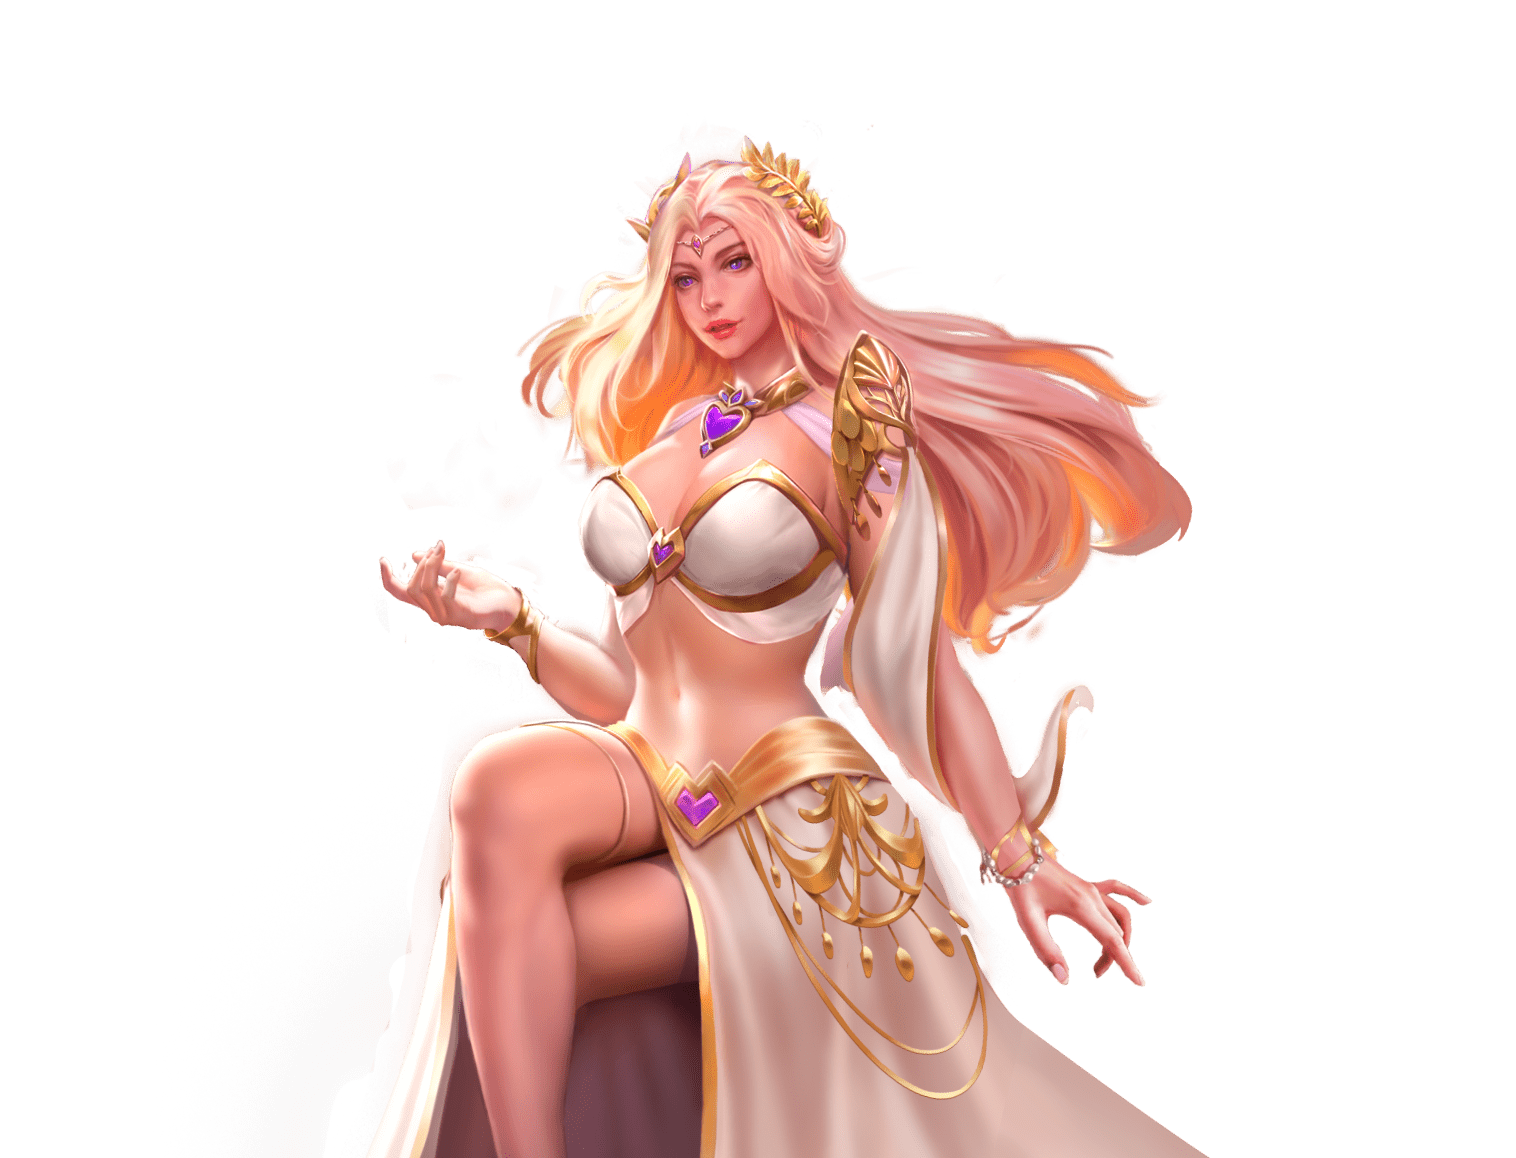 Aphrodite - Goddess of Love's assets